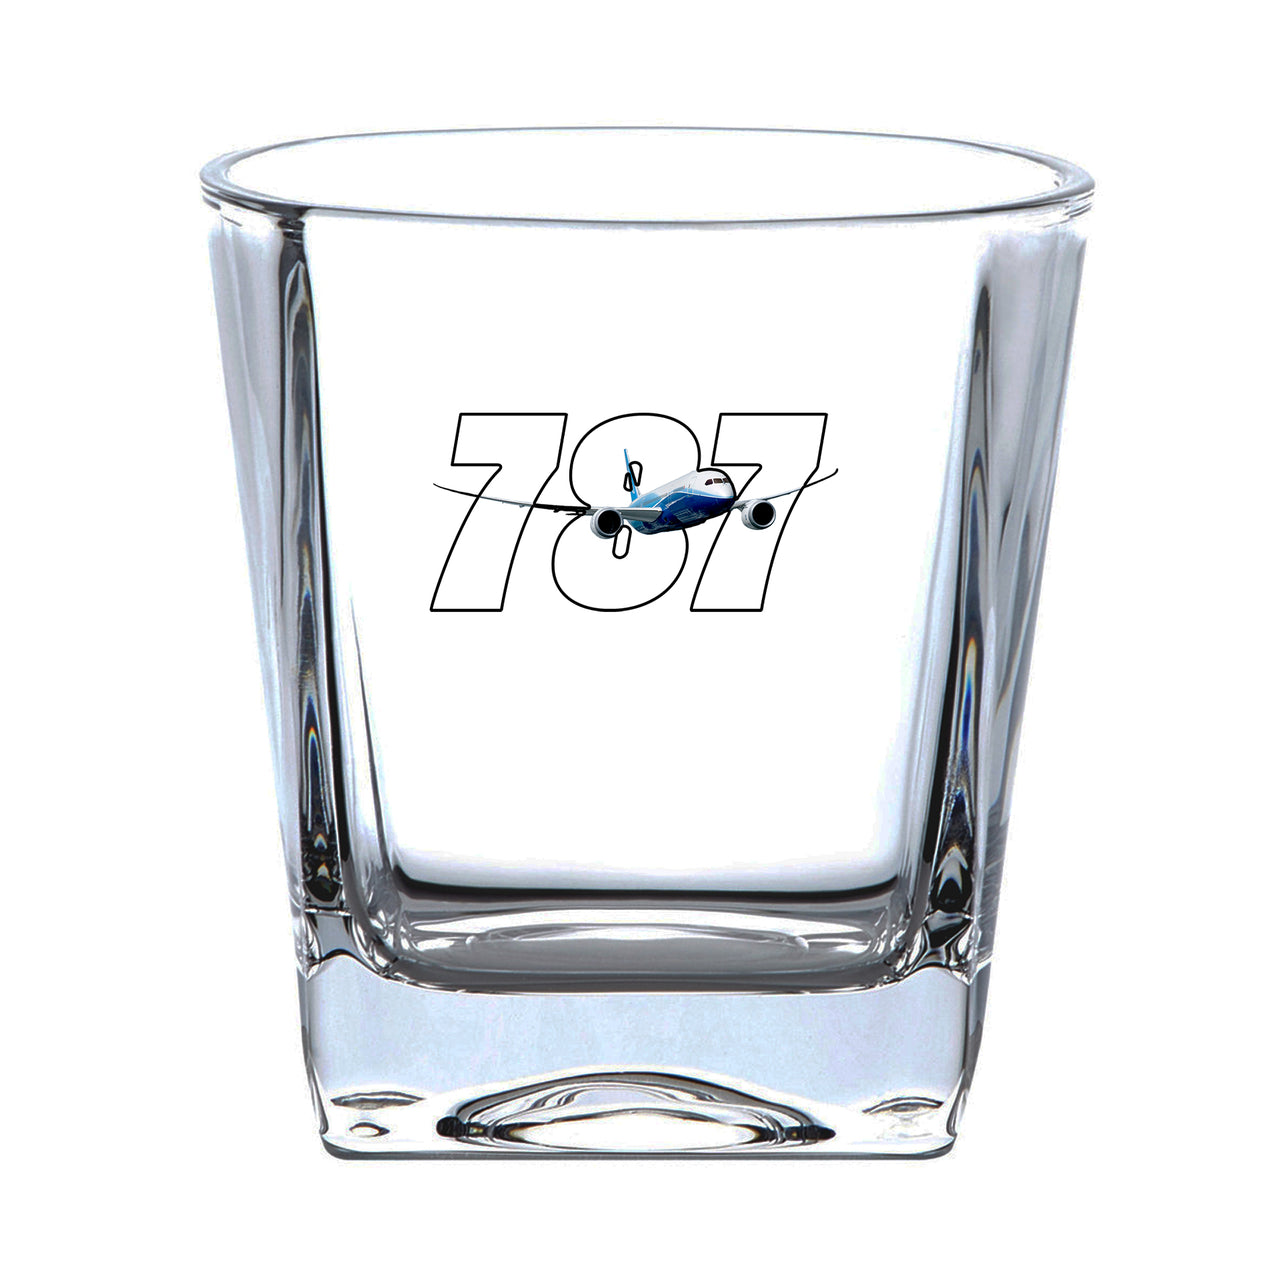 Super Boeing 787 Designed Whiskey Glass